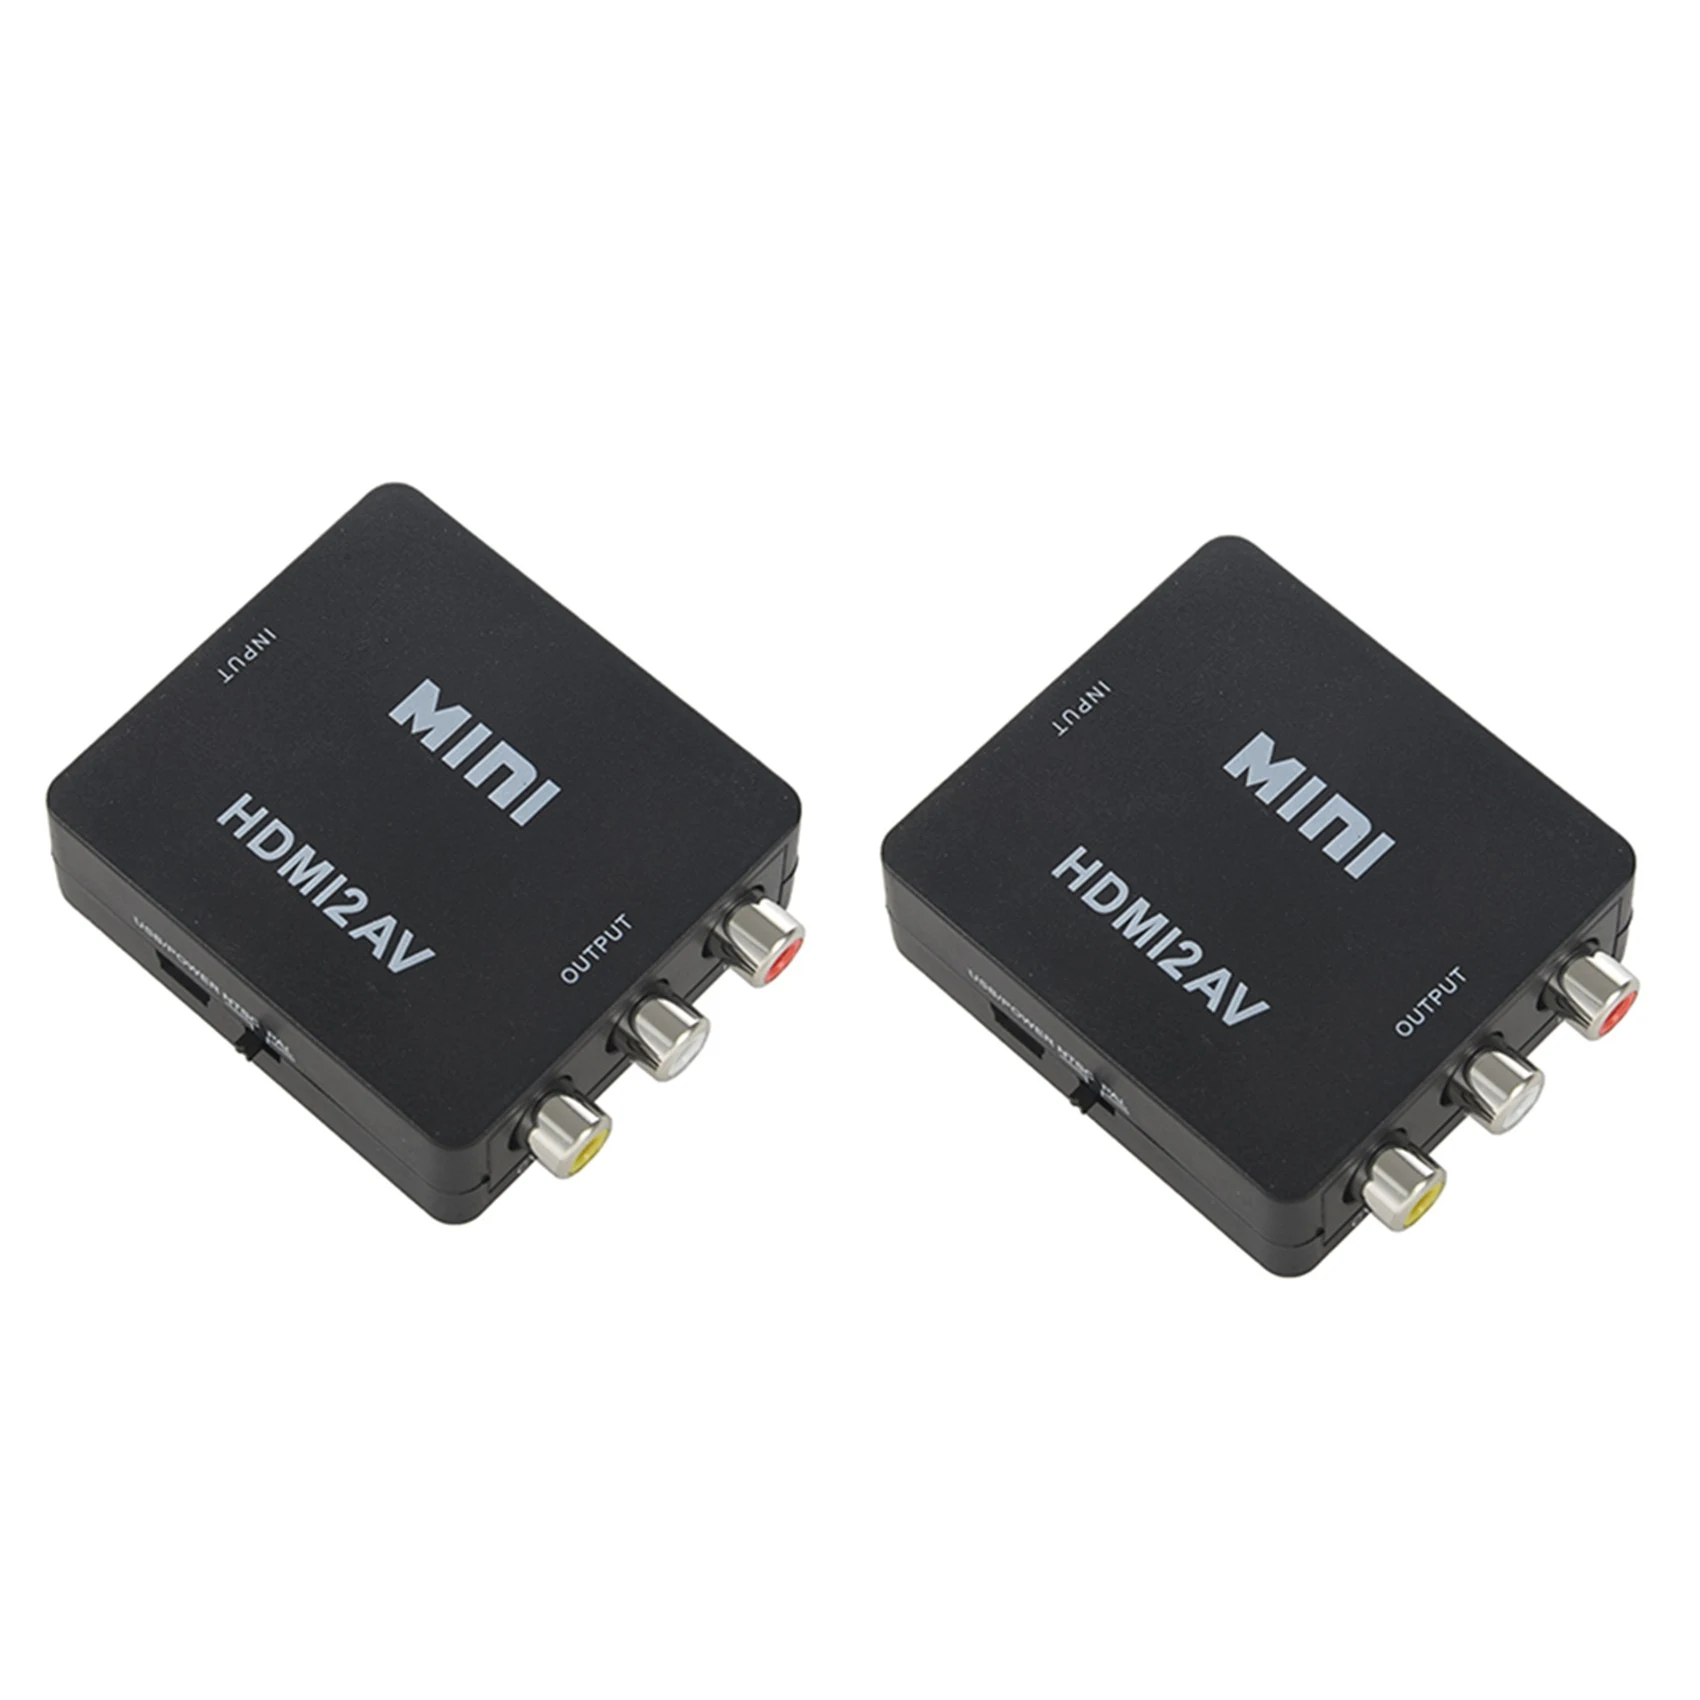 

2X Mini 1080P HDMI Composite to RCA Audio Video AV CVBS Converter Adapter for HDTV